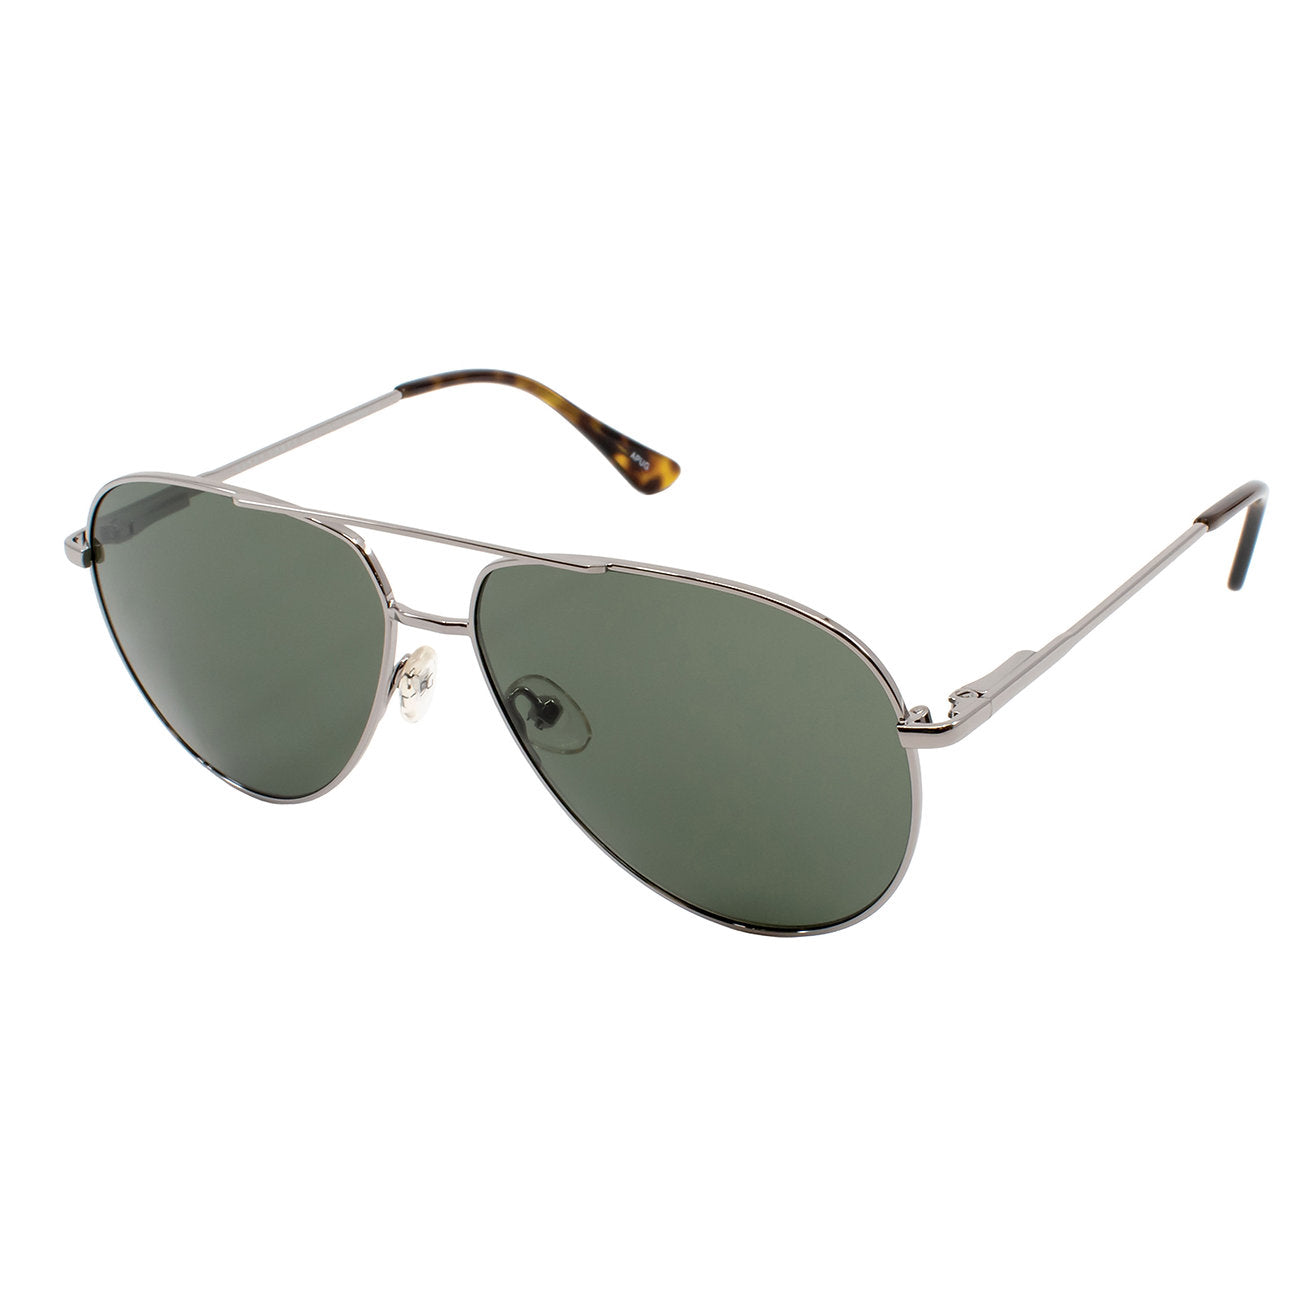 Danny Gokey sunglasses model 502 gunmetal